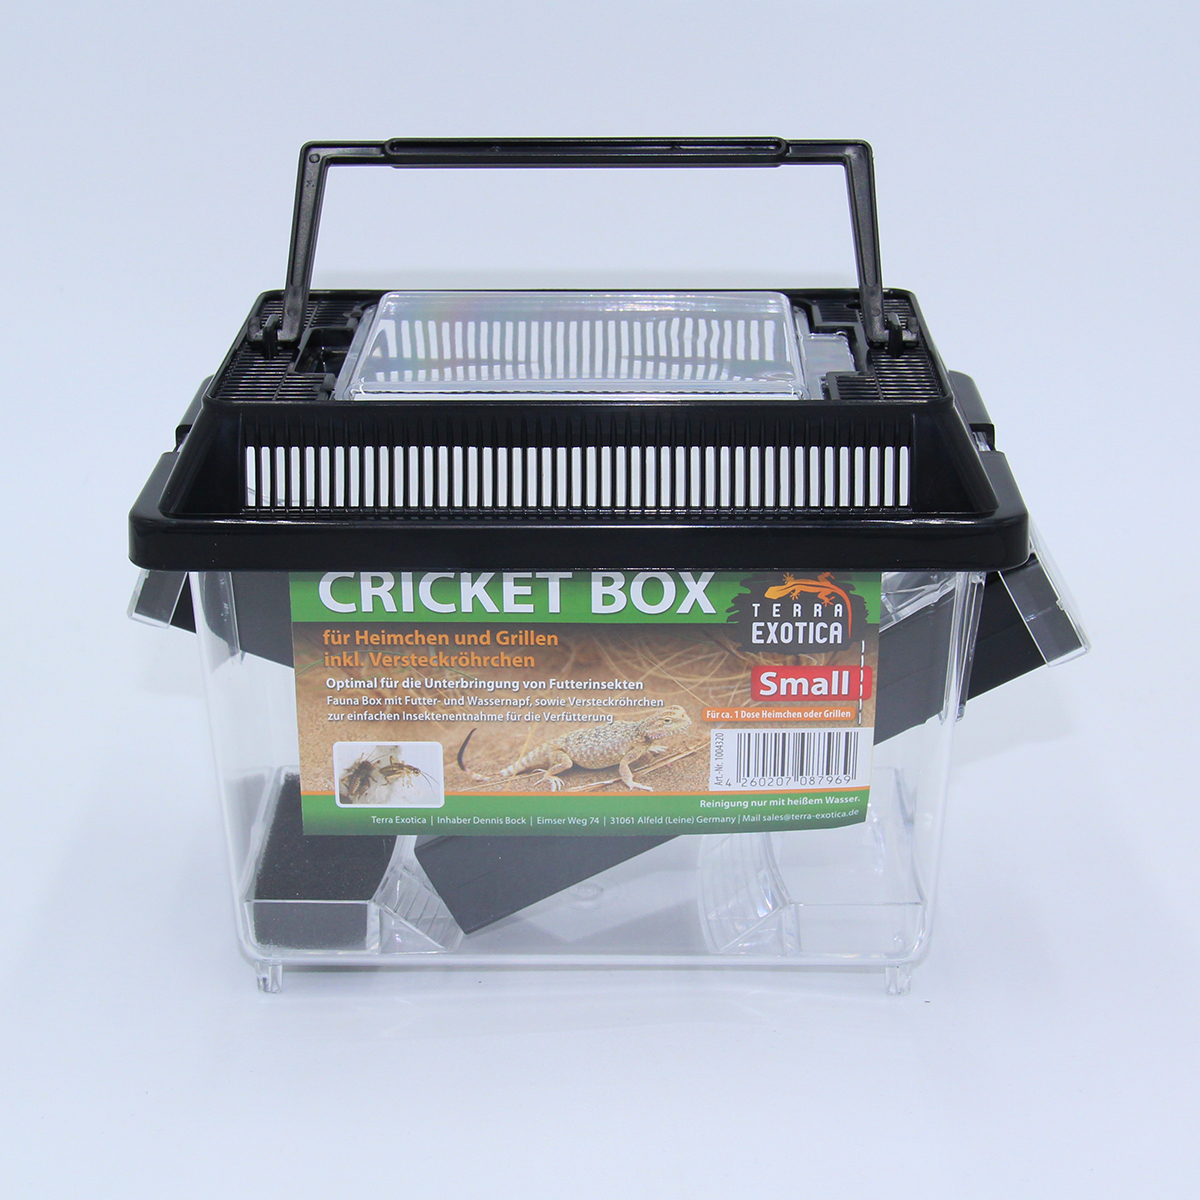 Cricket Box - 18 x 11 x 14 cm - Small